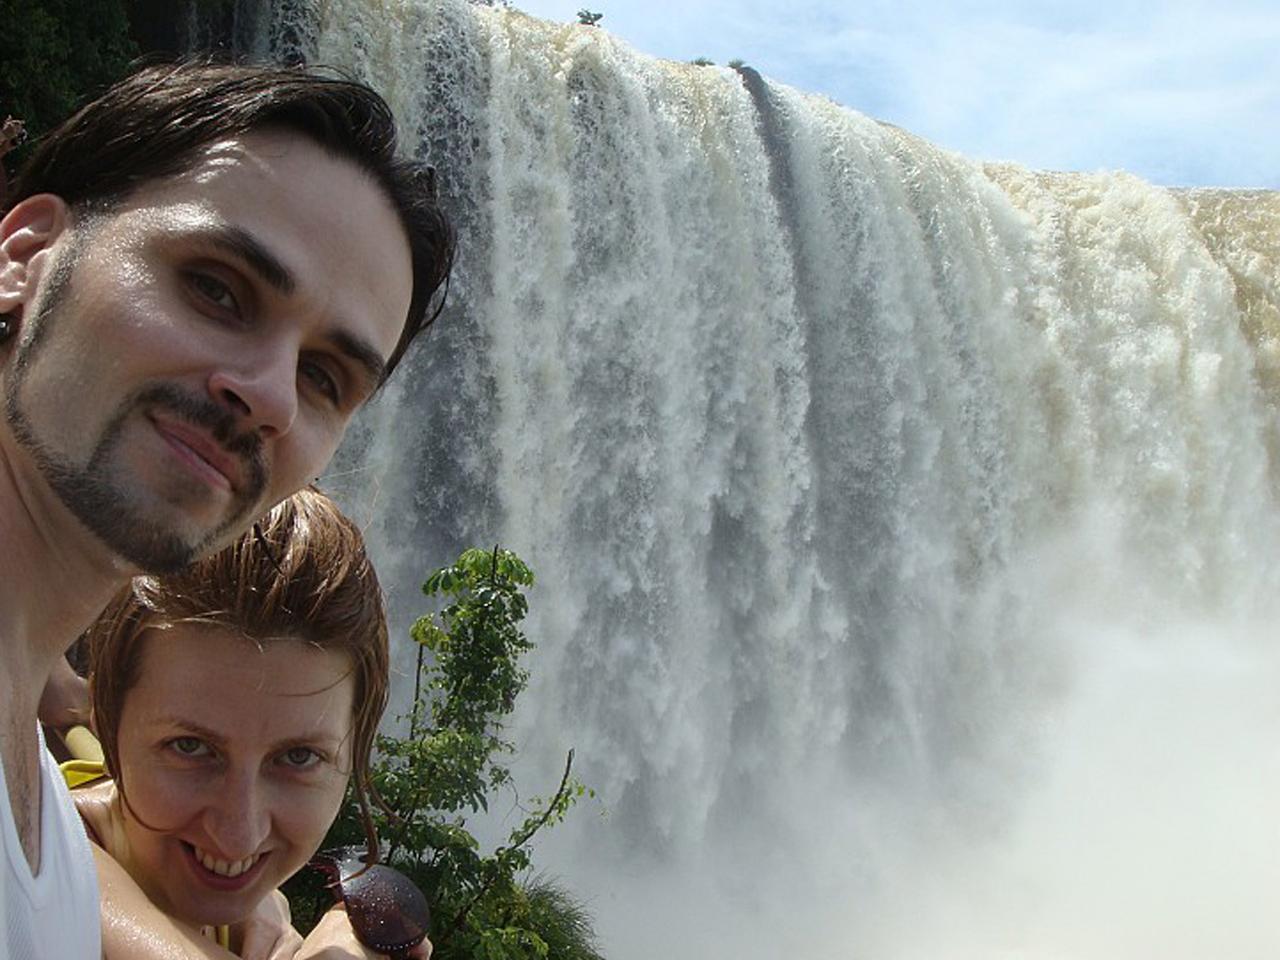 обои Влюбленная пара и водопад фото